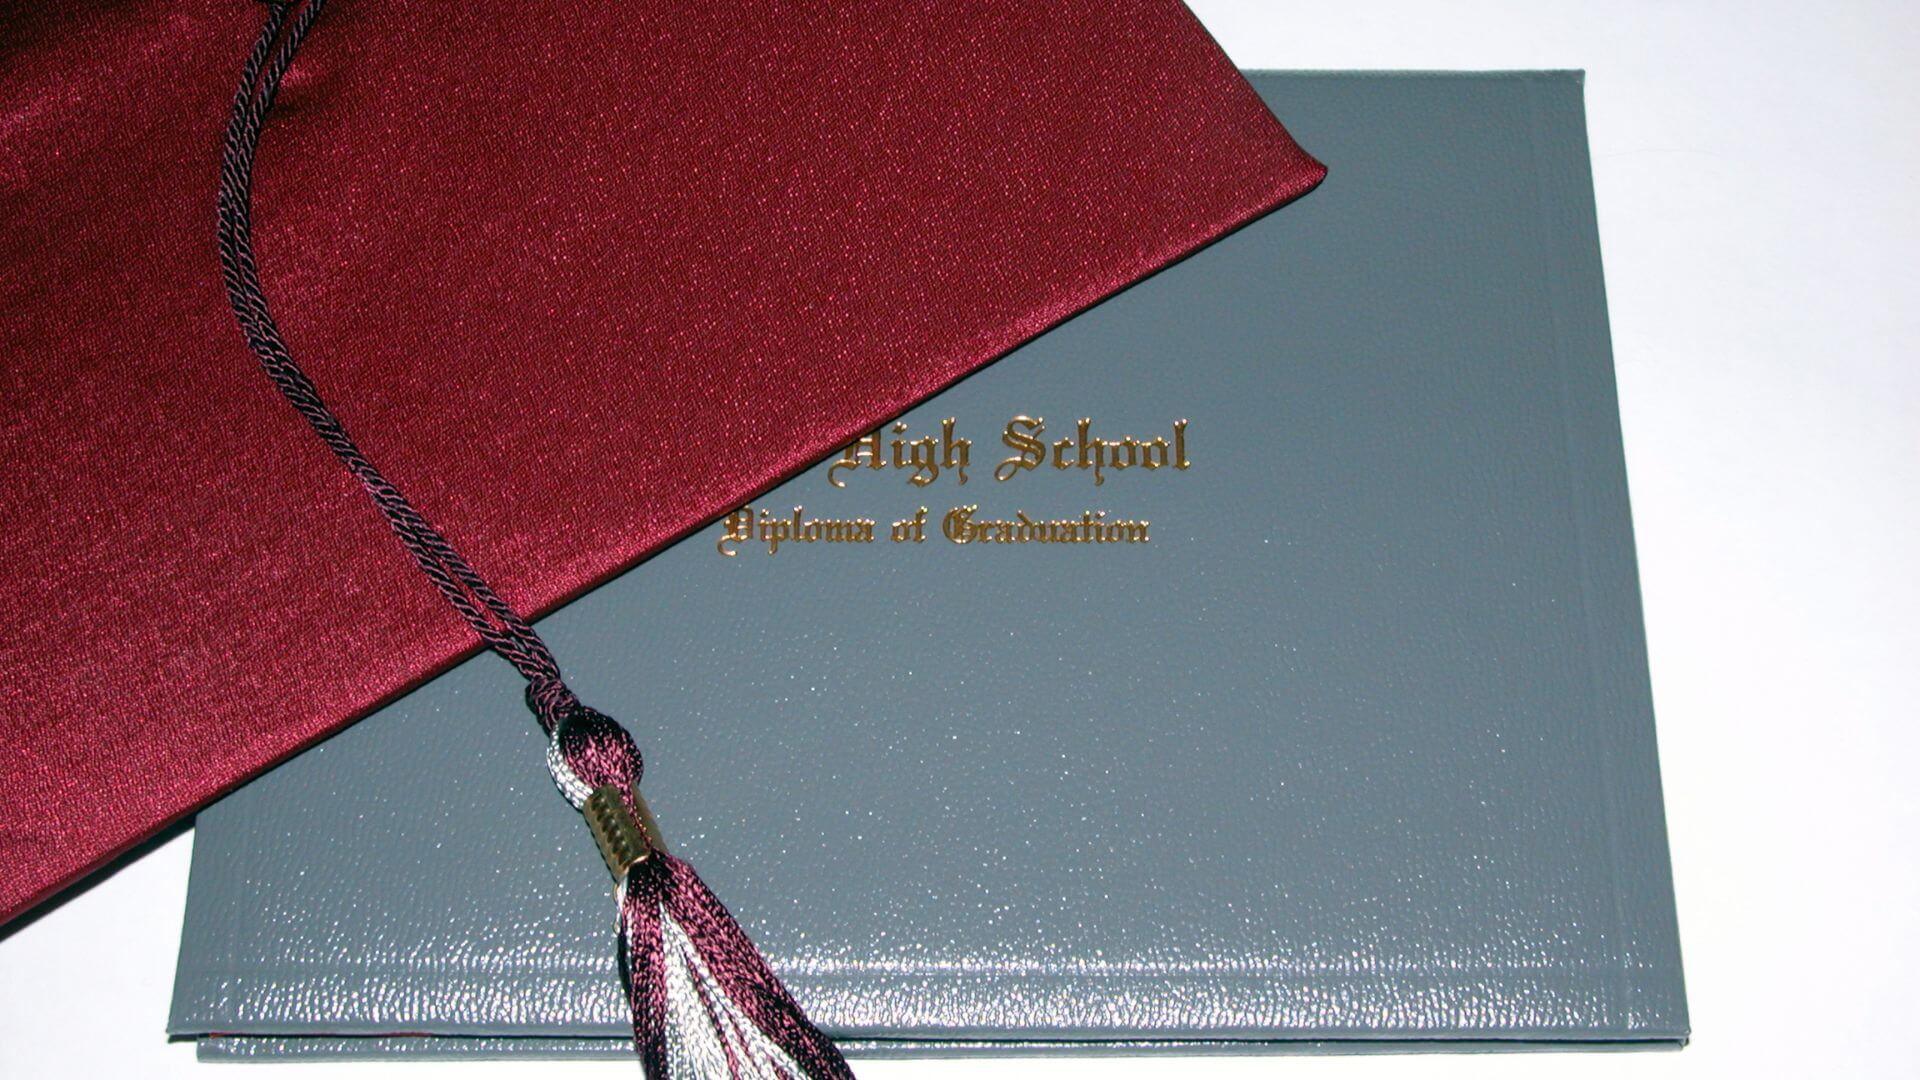 high school equivalency diploma